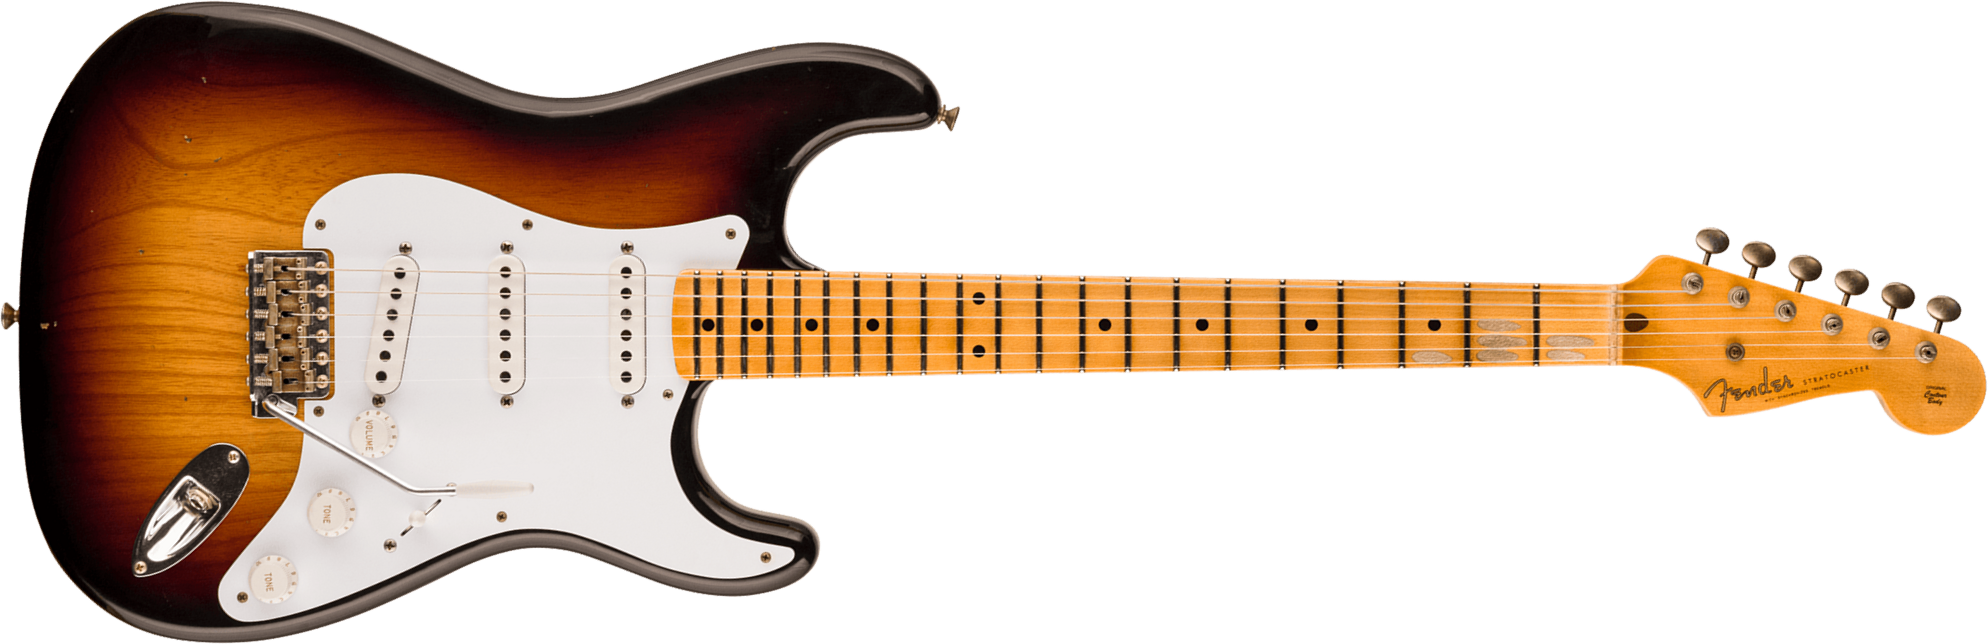 Fender Custom Shop Strat 1954 70th Anniv. 3s Trem Mn - Journeyman Relic Wide-fade 2-color Sunburst - E-Gitarre in Str-Form - Main picture